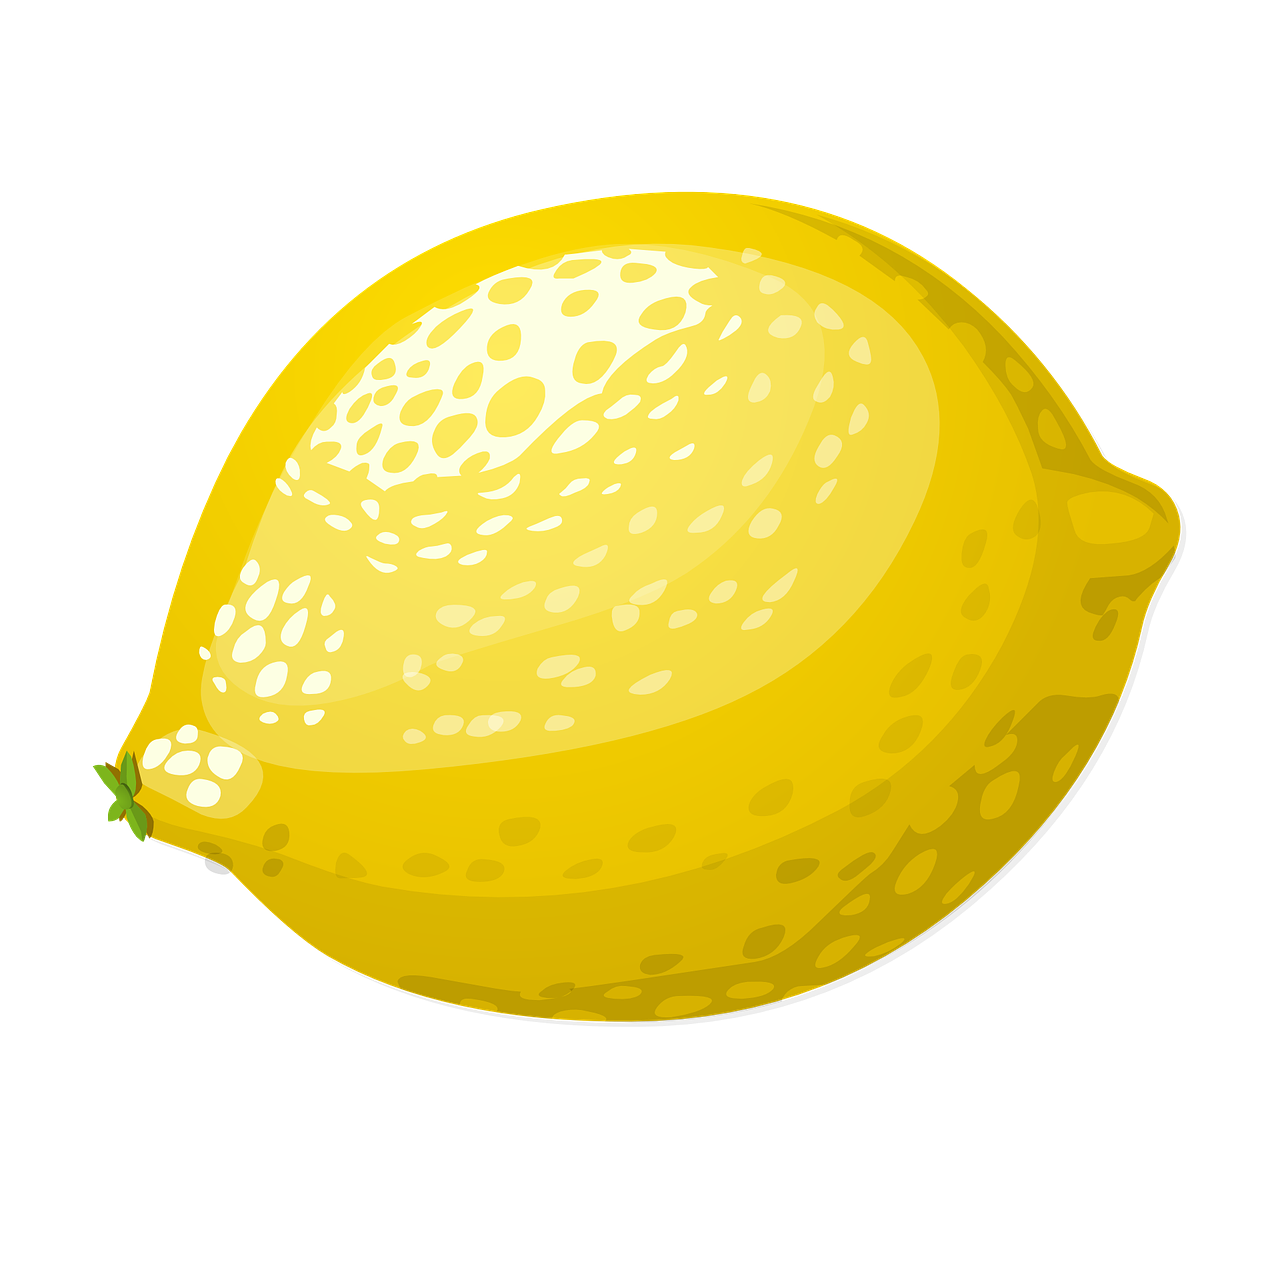 lemon yellow fruits free photo